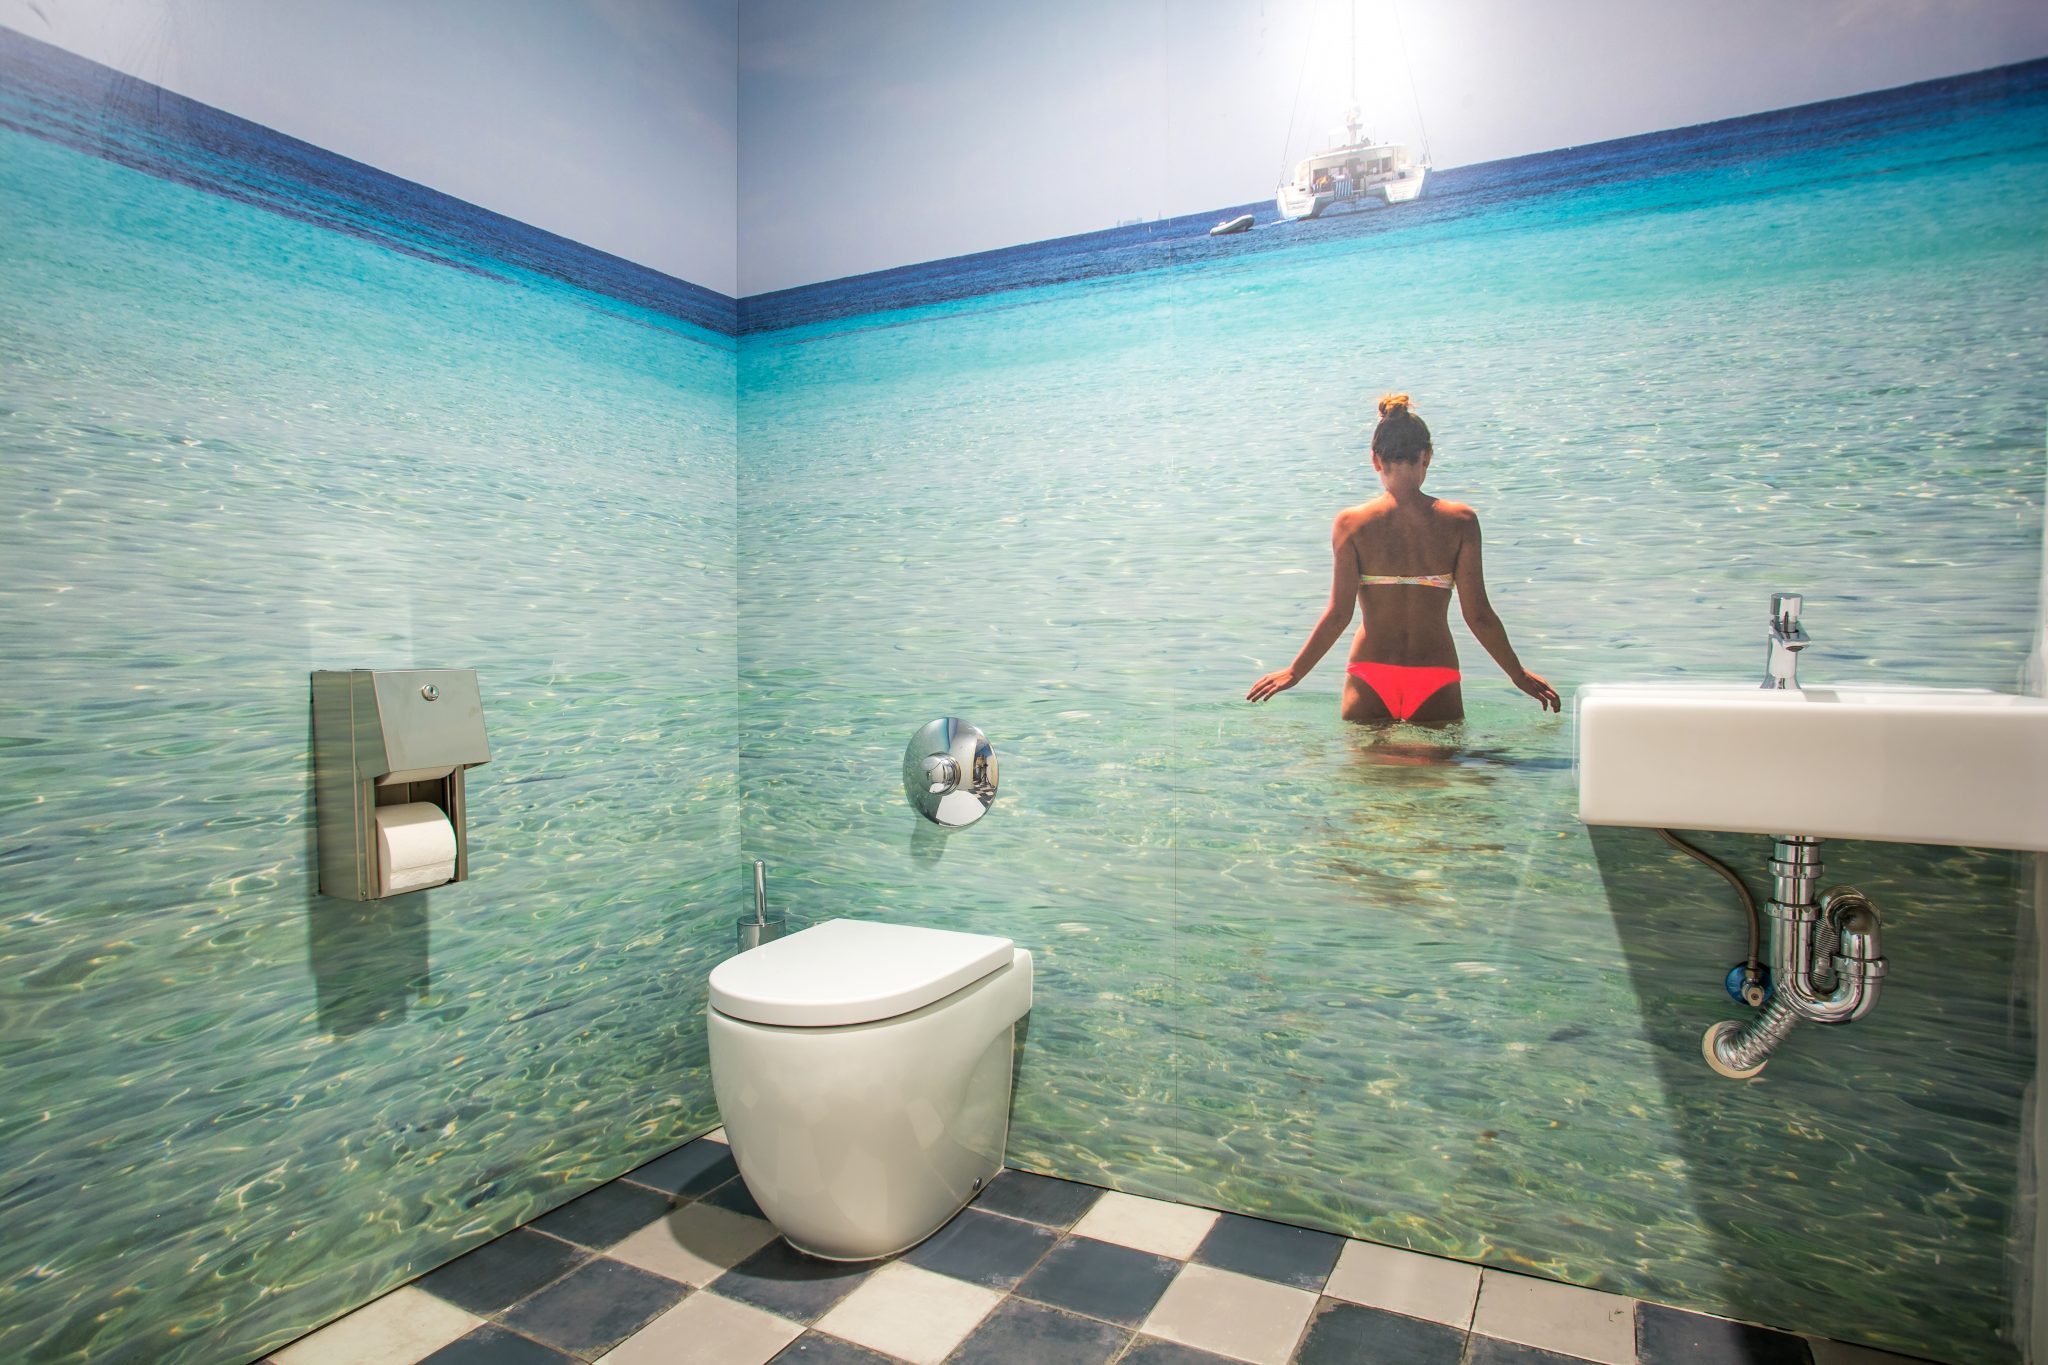 Iconic Ibiza nightclub transforms its washrooms with island imagery